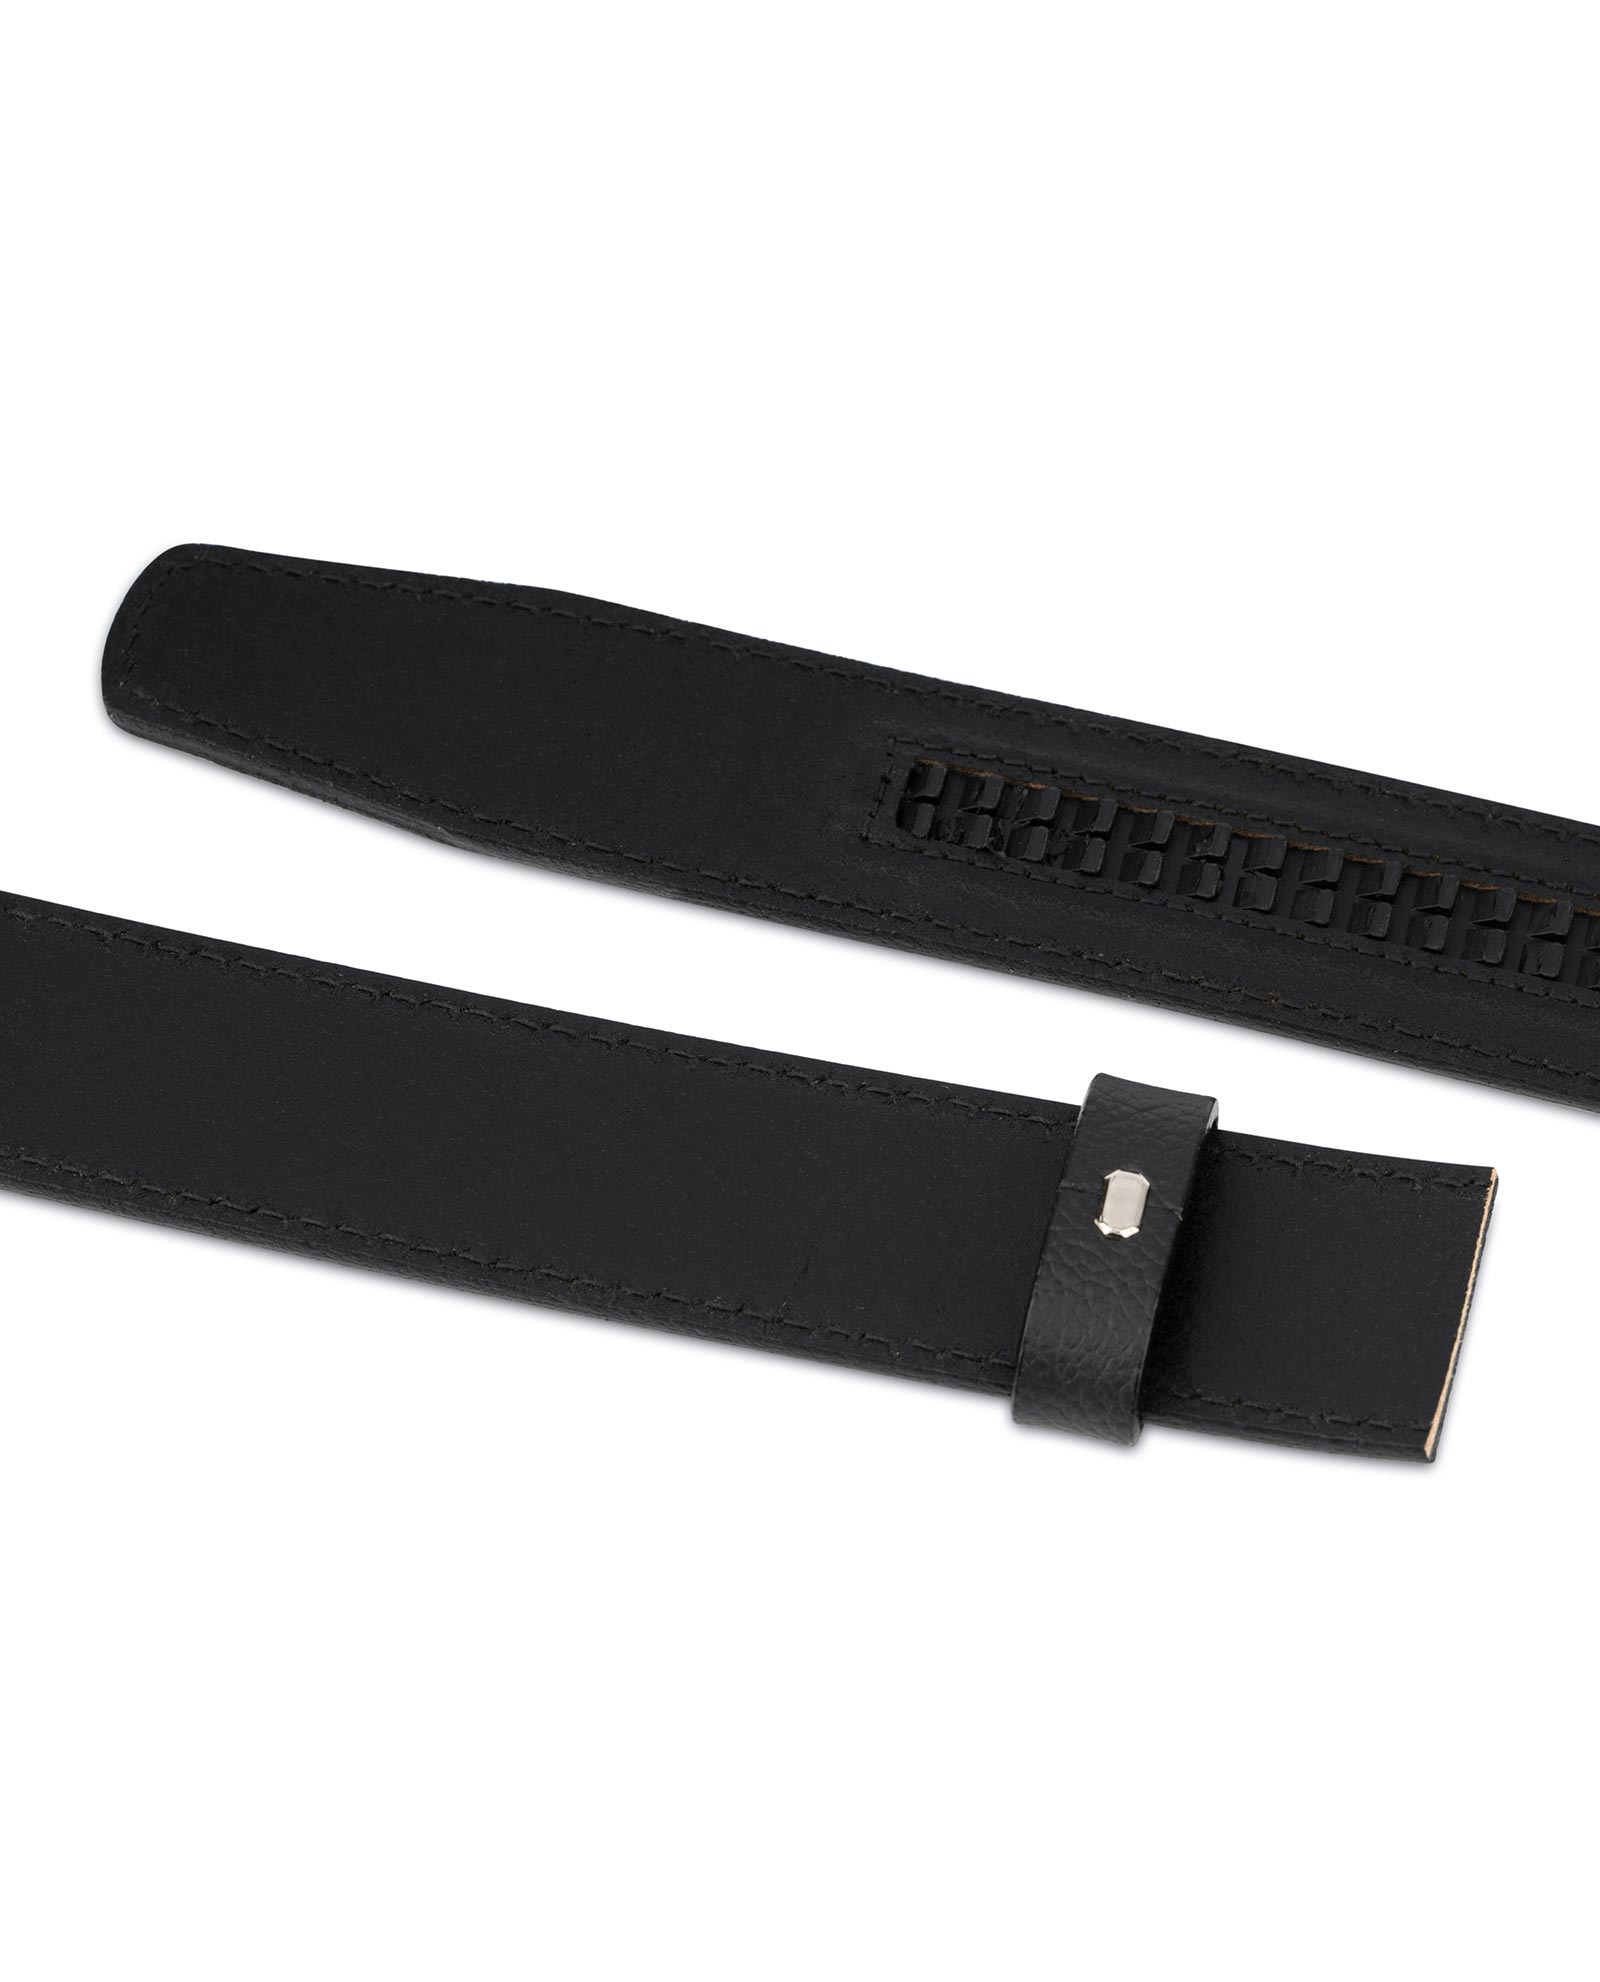 Buy Black Leather Strap for Men's Automatic Belt | LeatherBeltsOnline.com